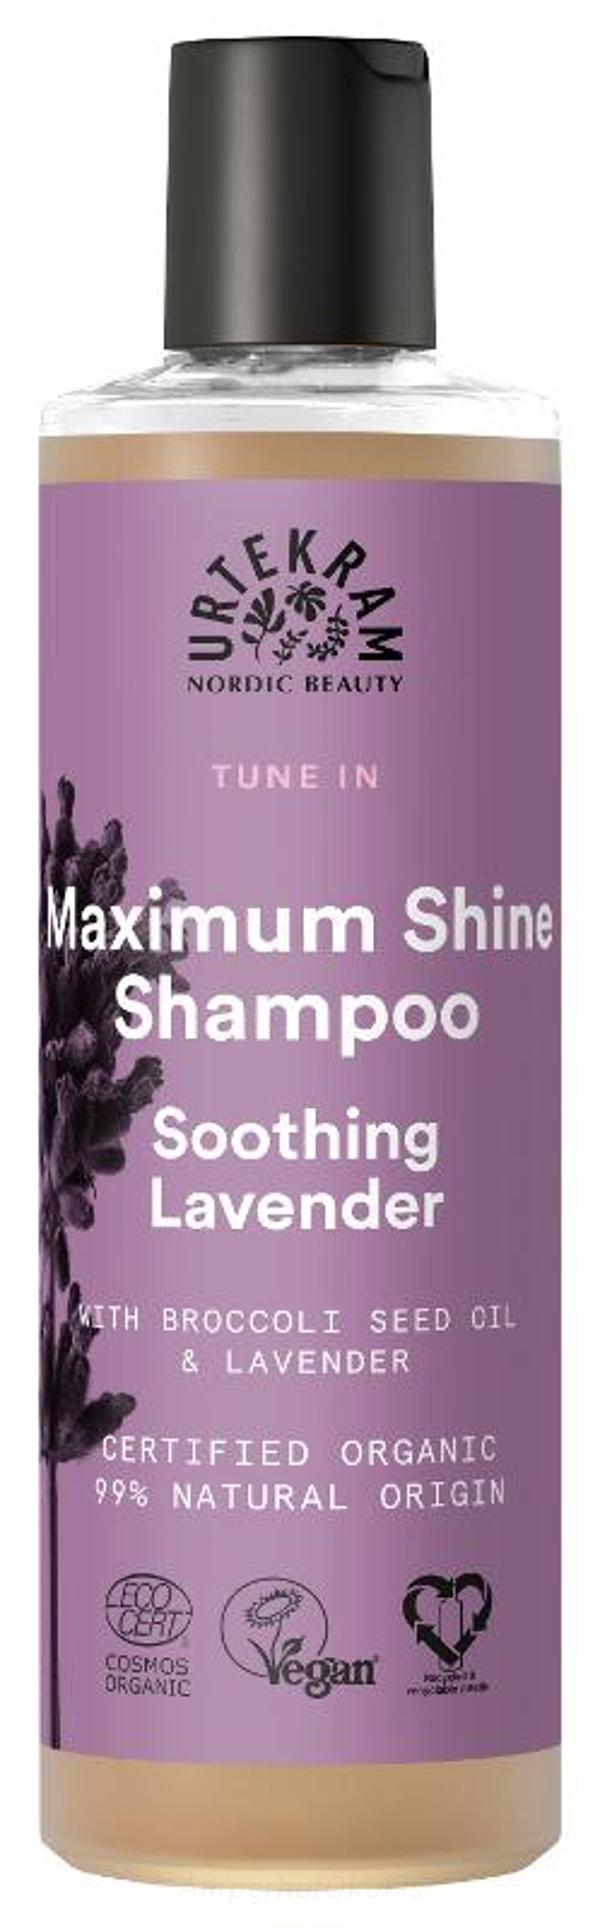 Produktfoto zu Shampoo Lavender 250 ml